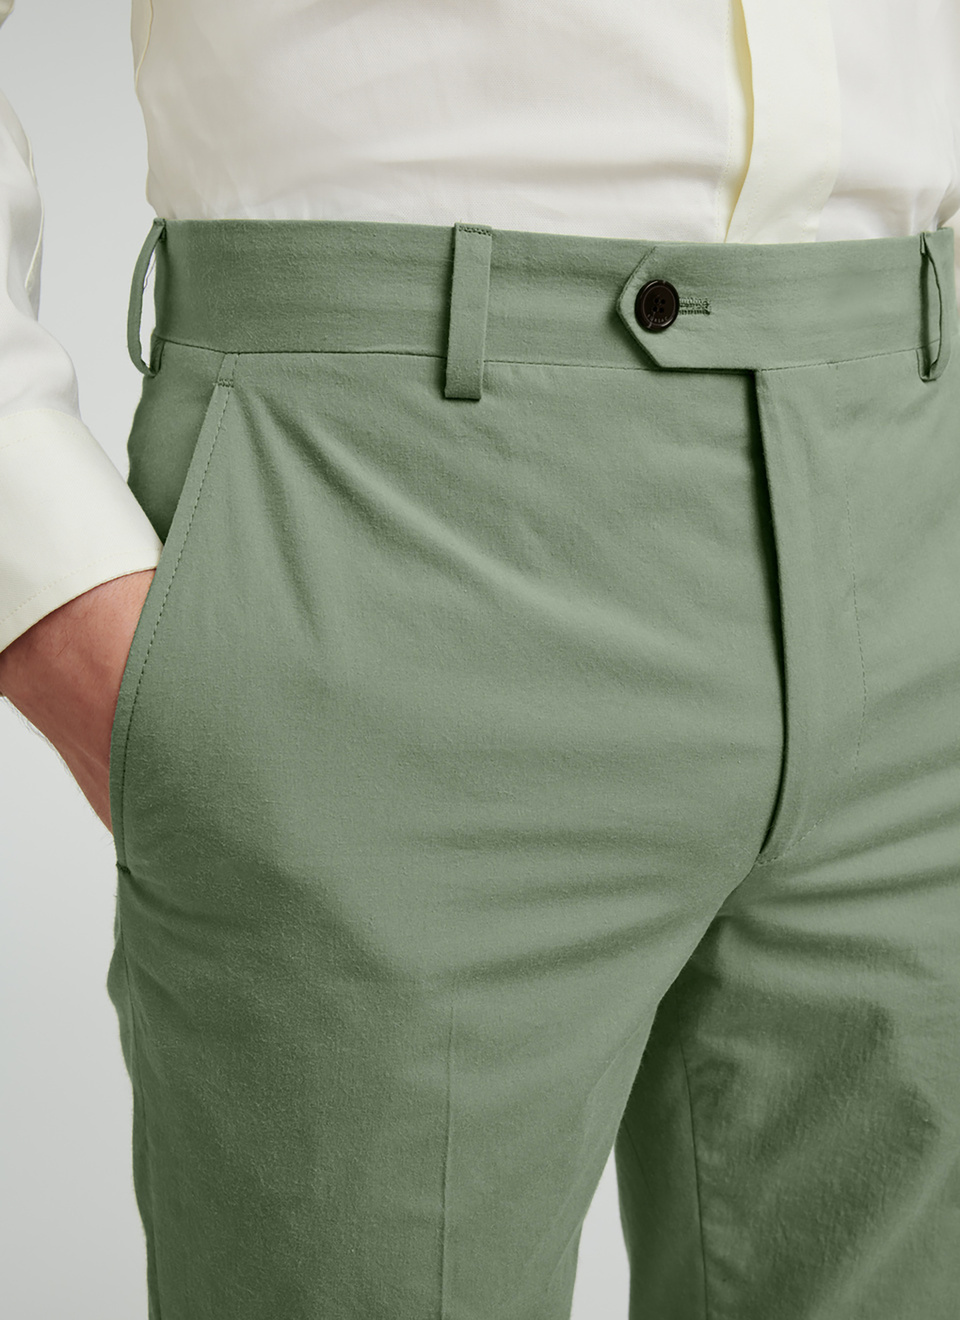 Sage green separate suits suit 22EC3VADA-VX06/45 - Men's cotton and ...